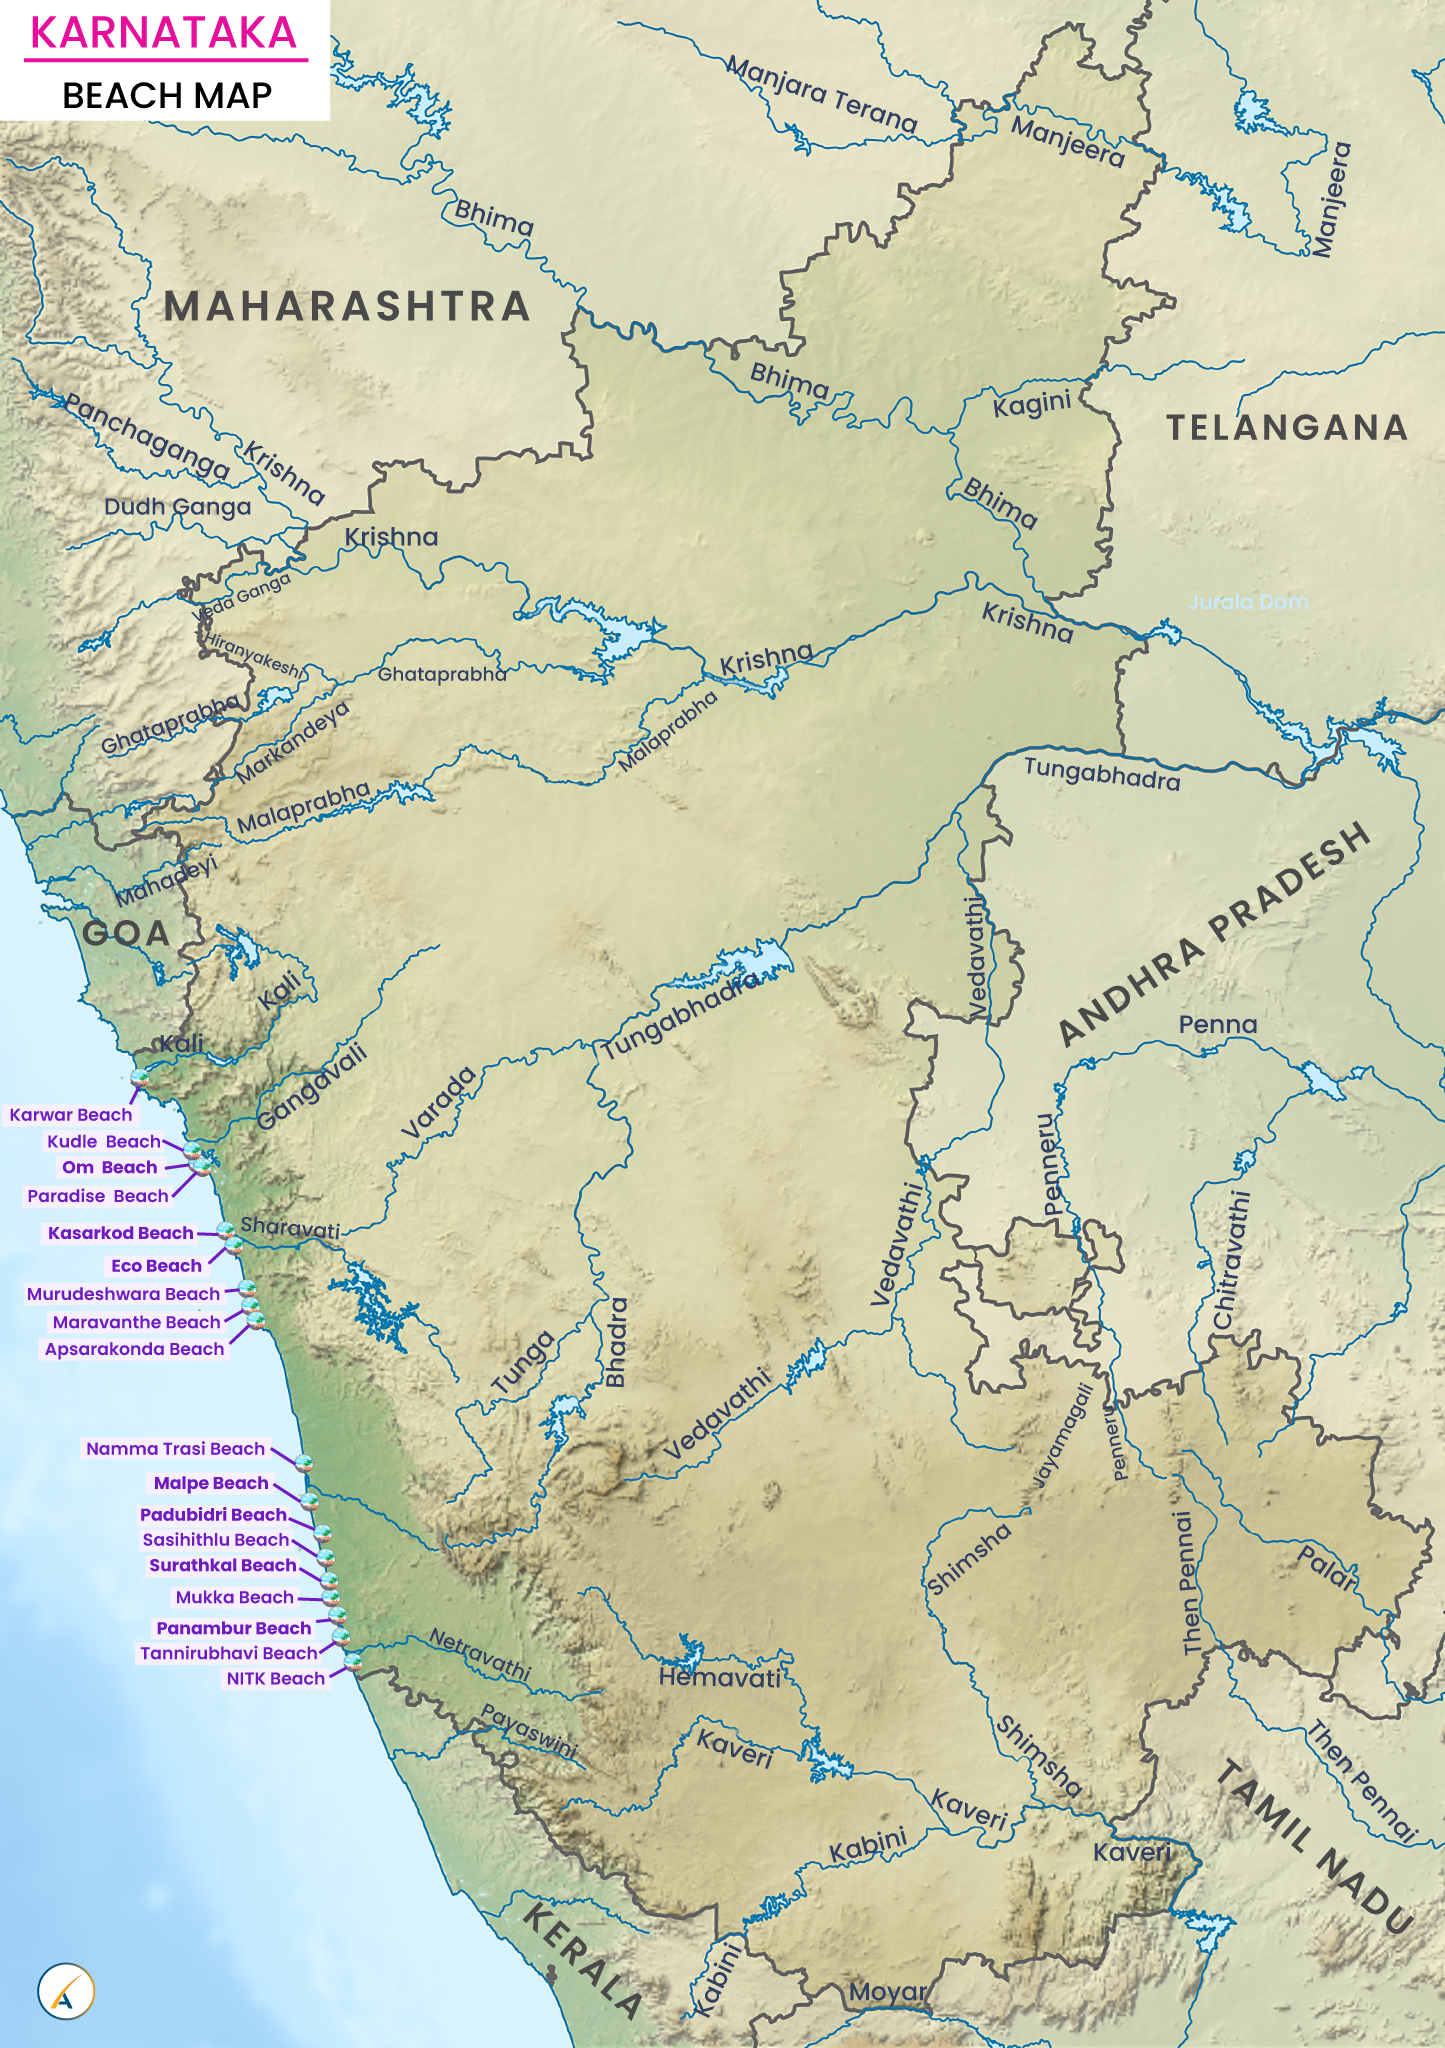 Karnataka Beach Map